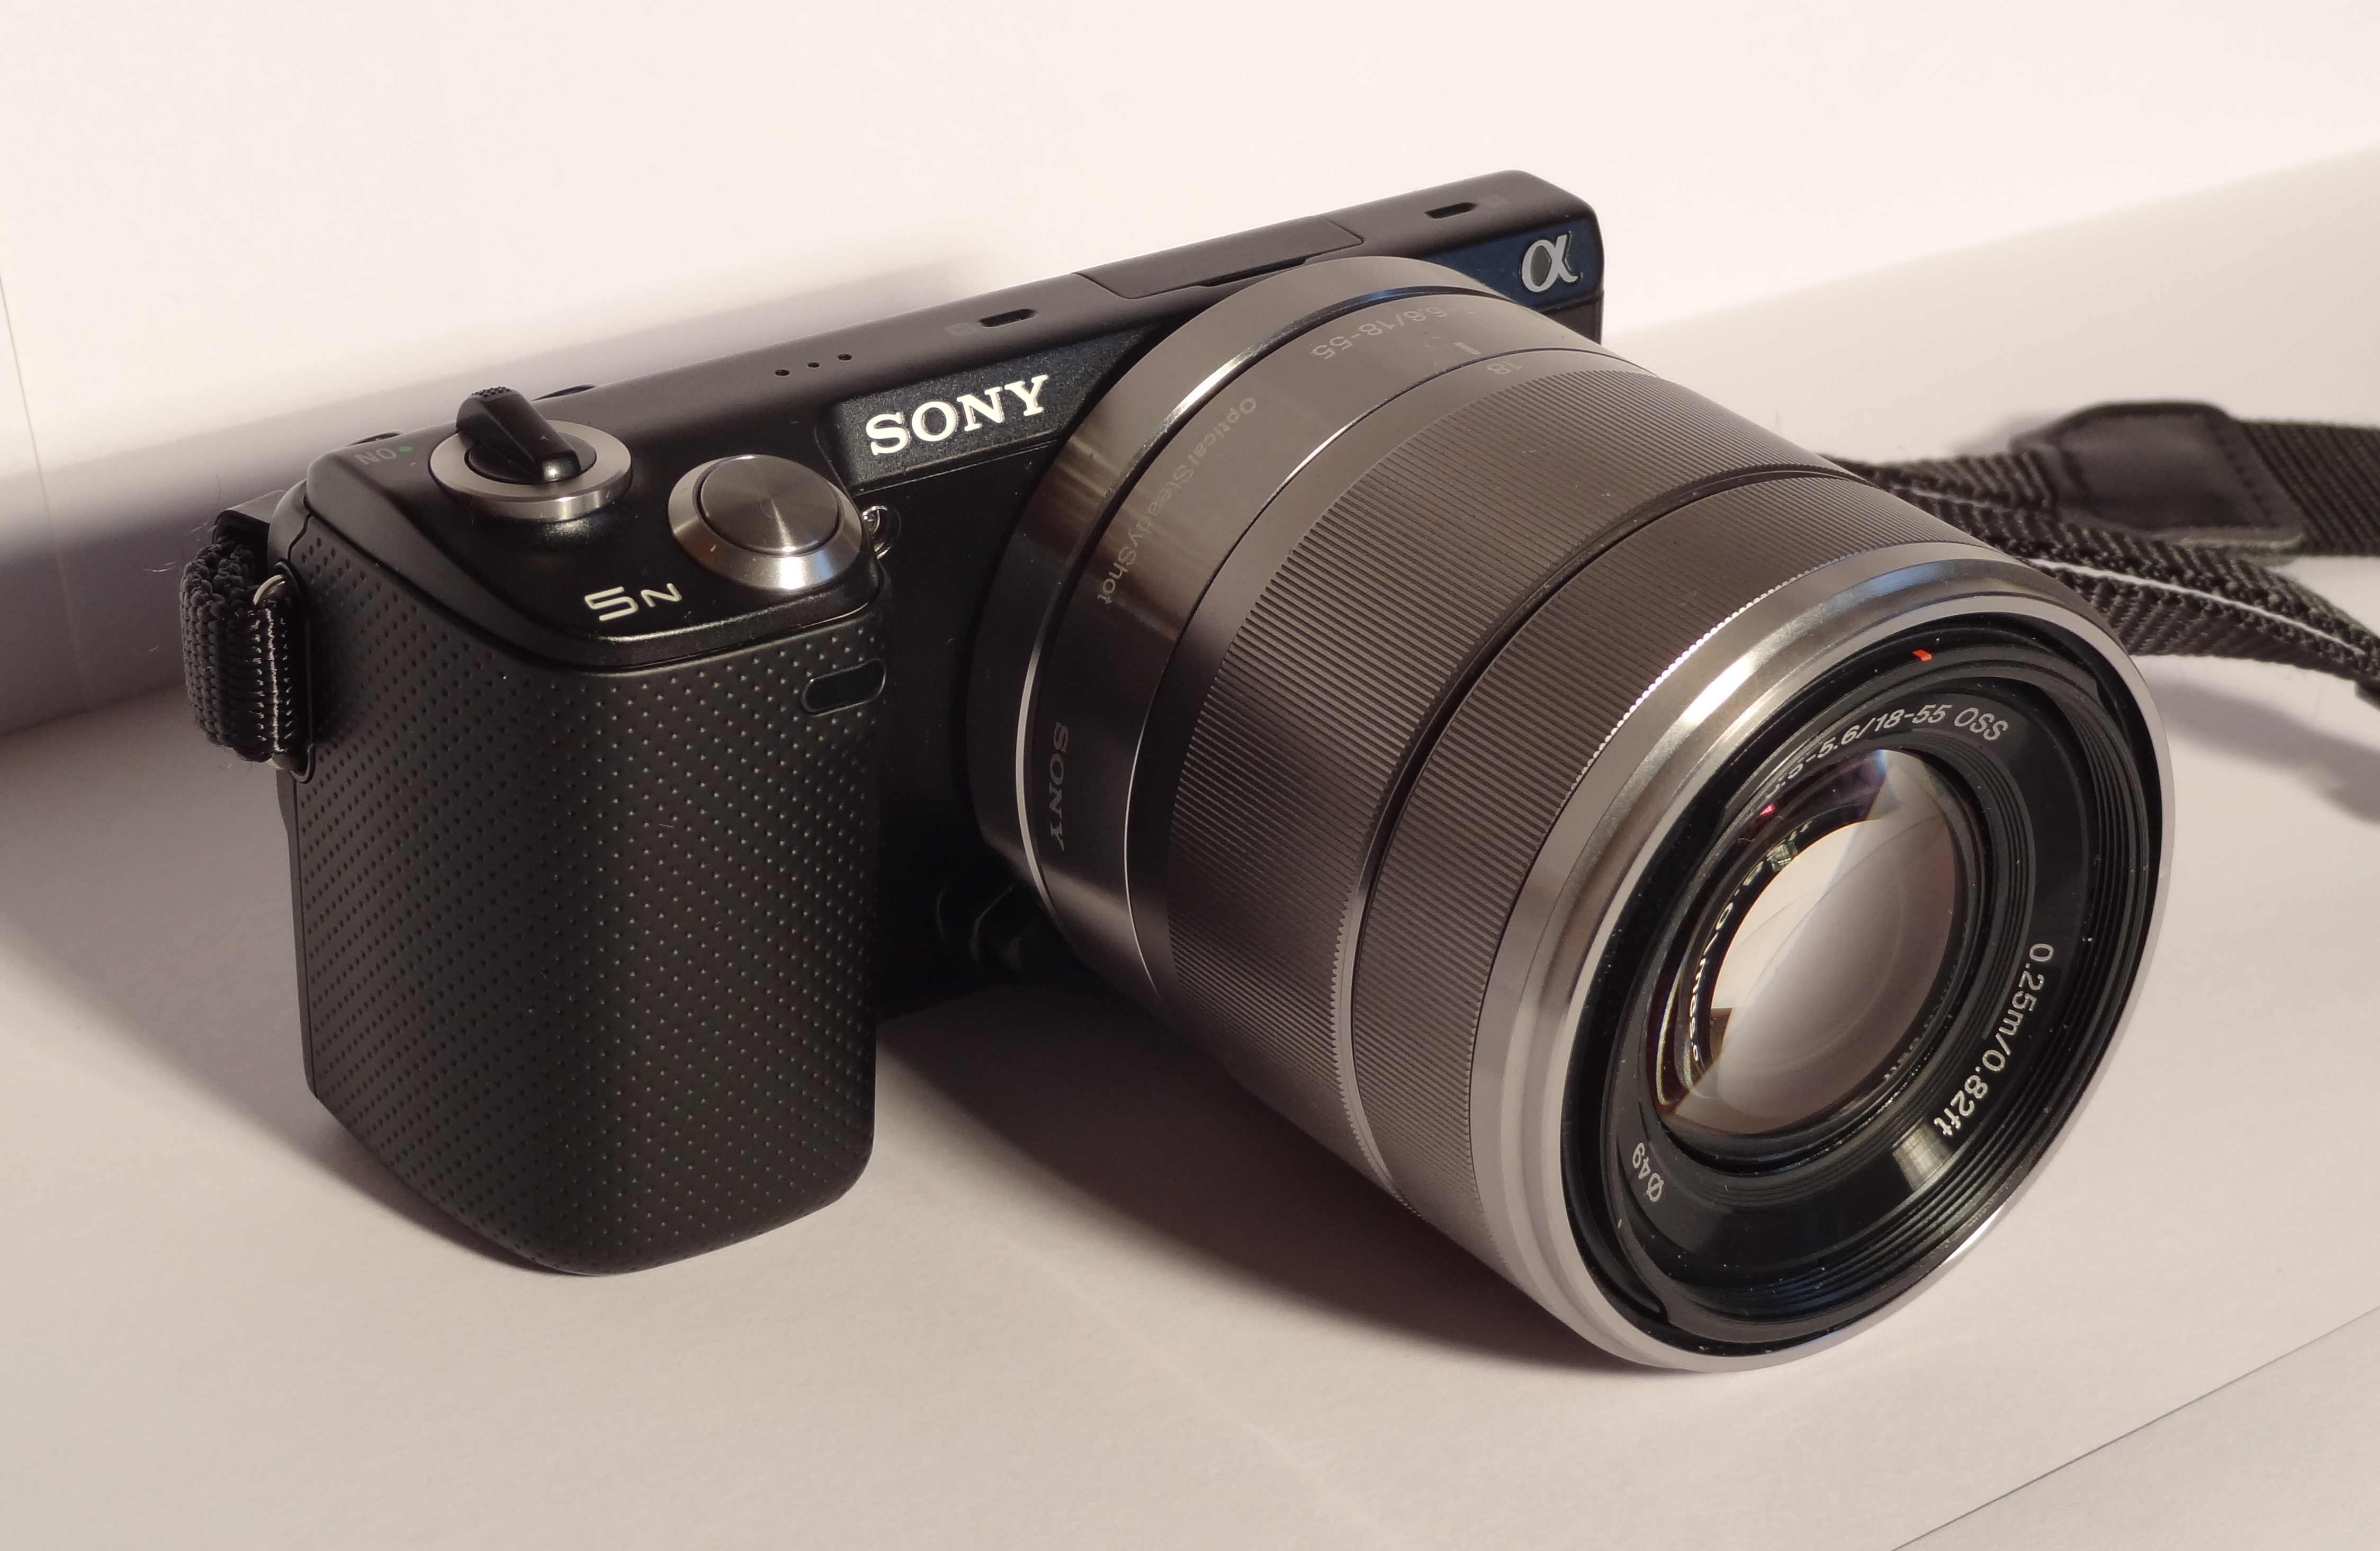 File:Sony NEX-5N with 18-55.jpg - Wikipedia